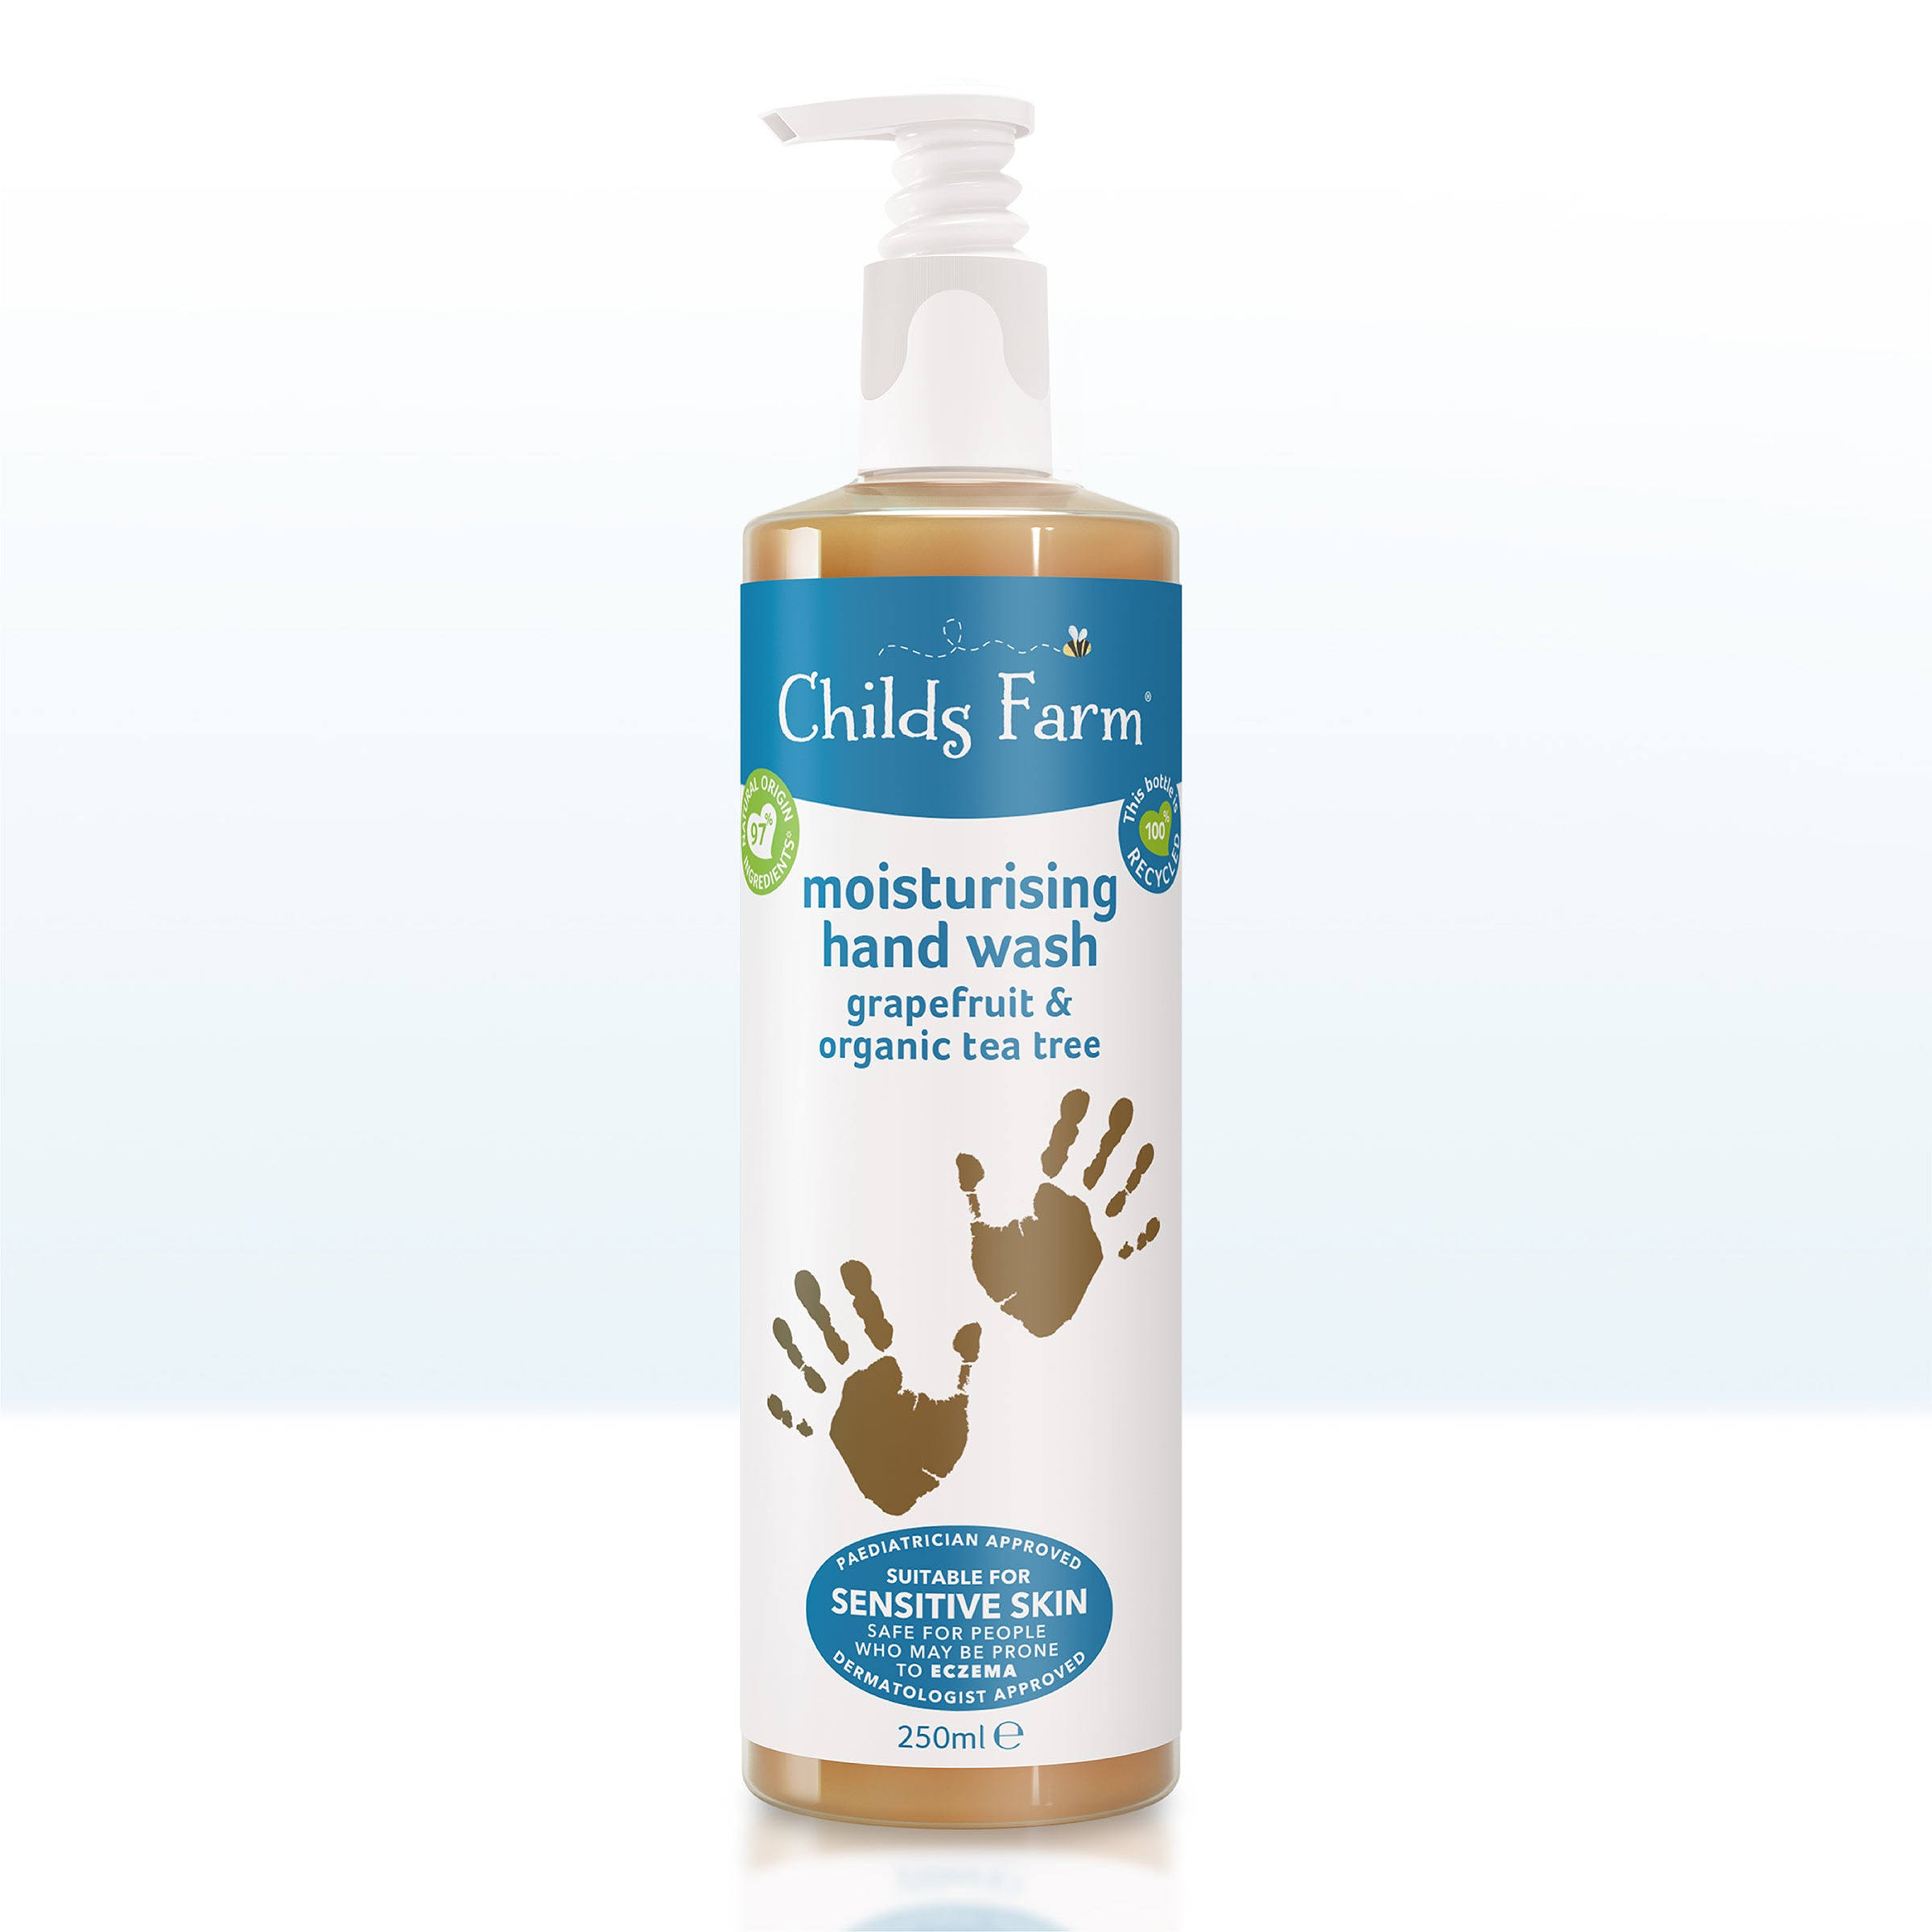 Childs Farm Hand Wash - Grapefruit and Tea Tree Oil, 250ml